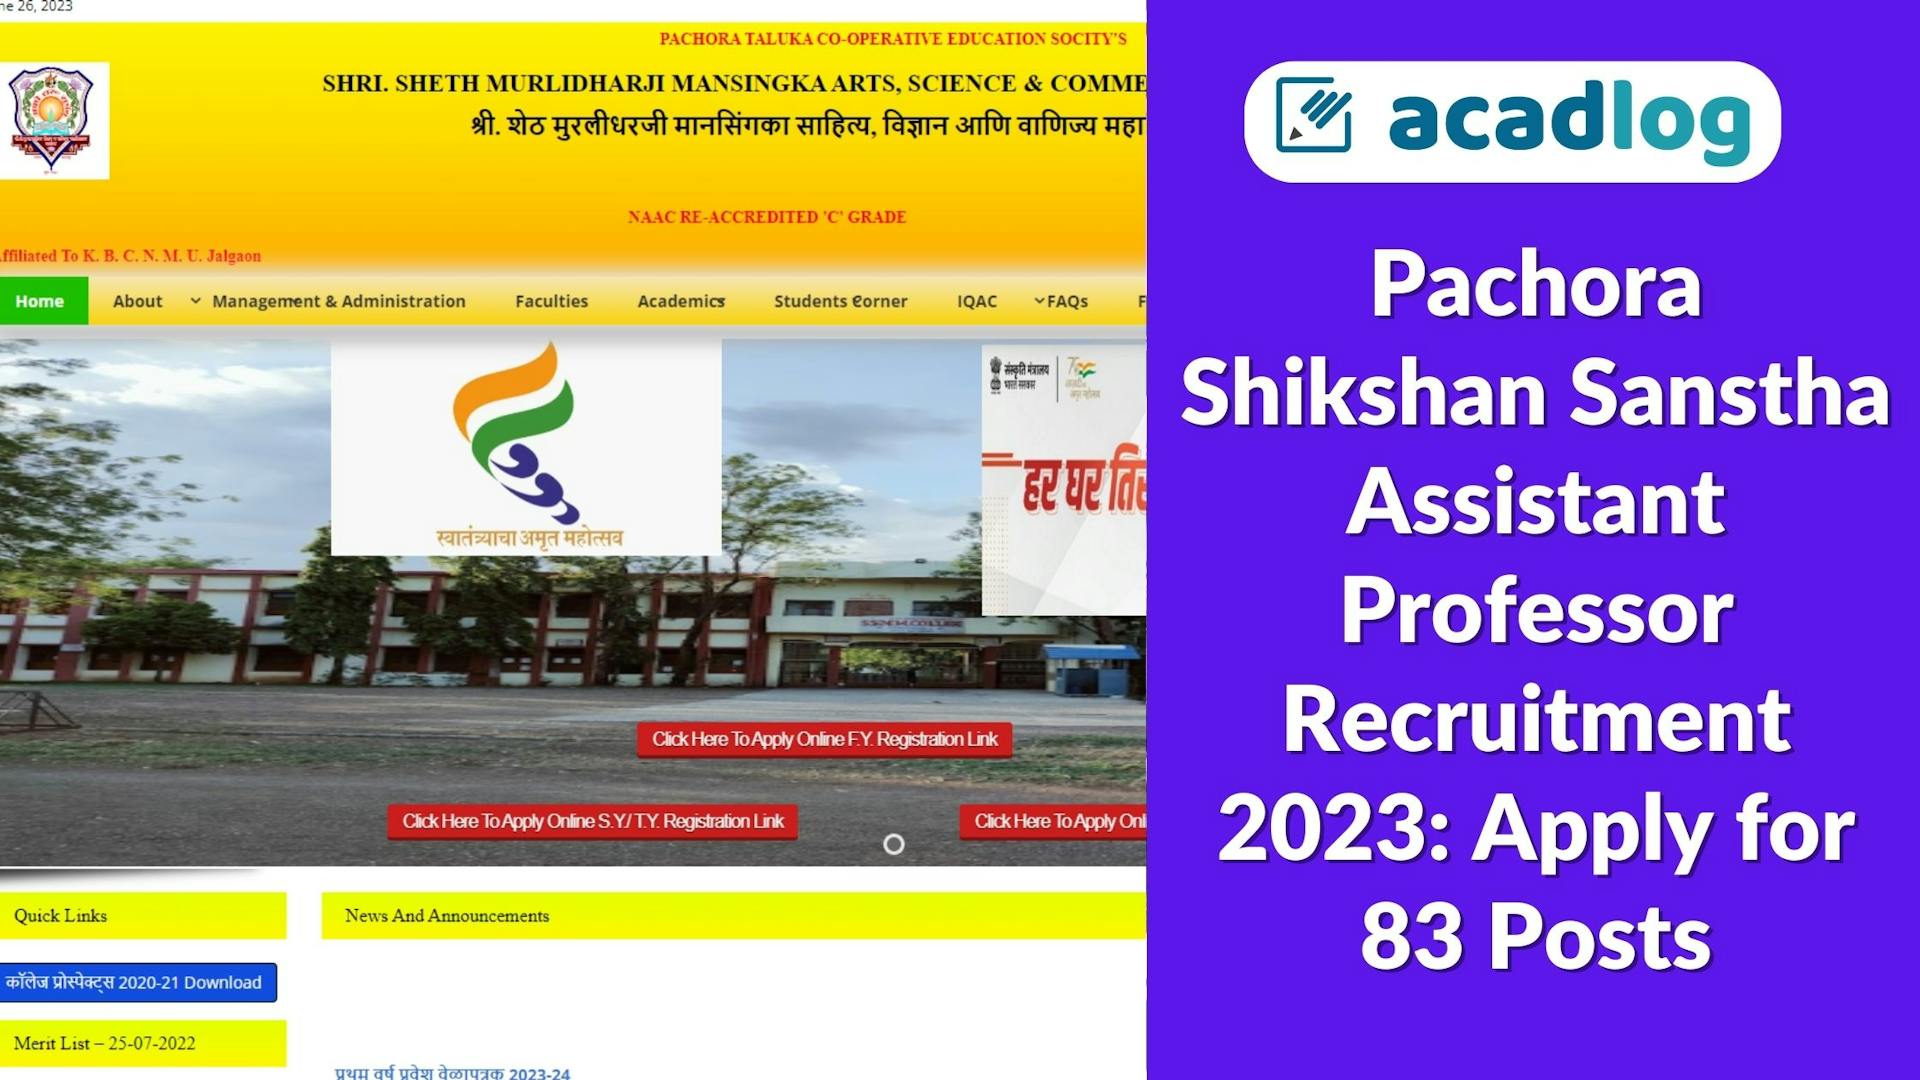 Pachora Shikshan Sanstha Assistant Professor Recruitment 2023: Apply for 83 Posts